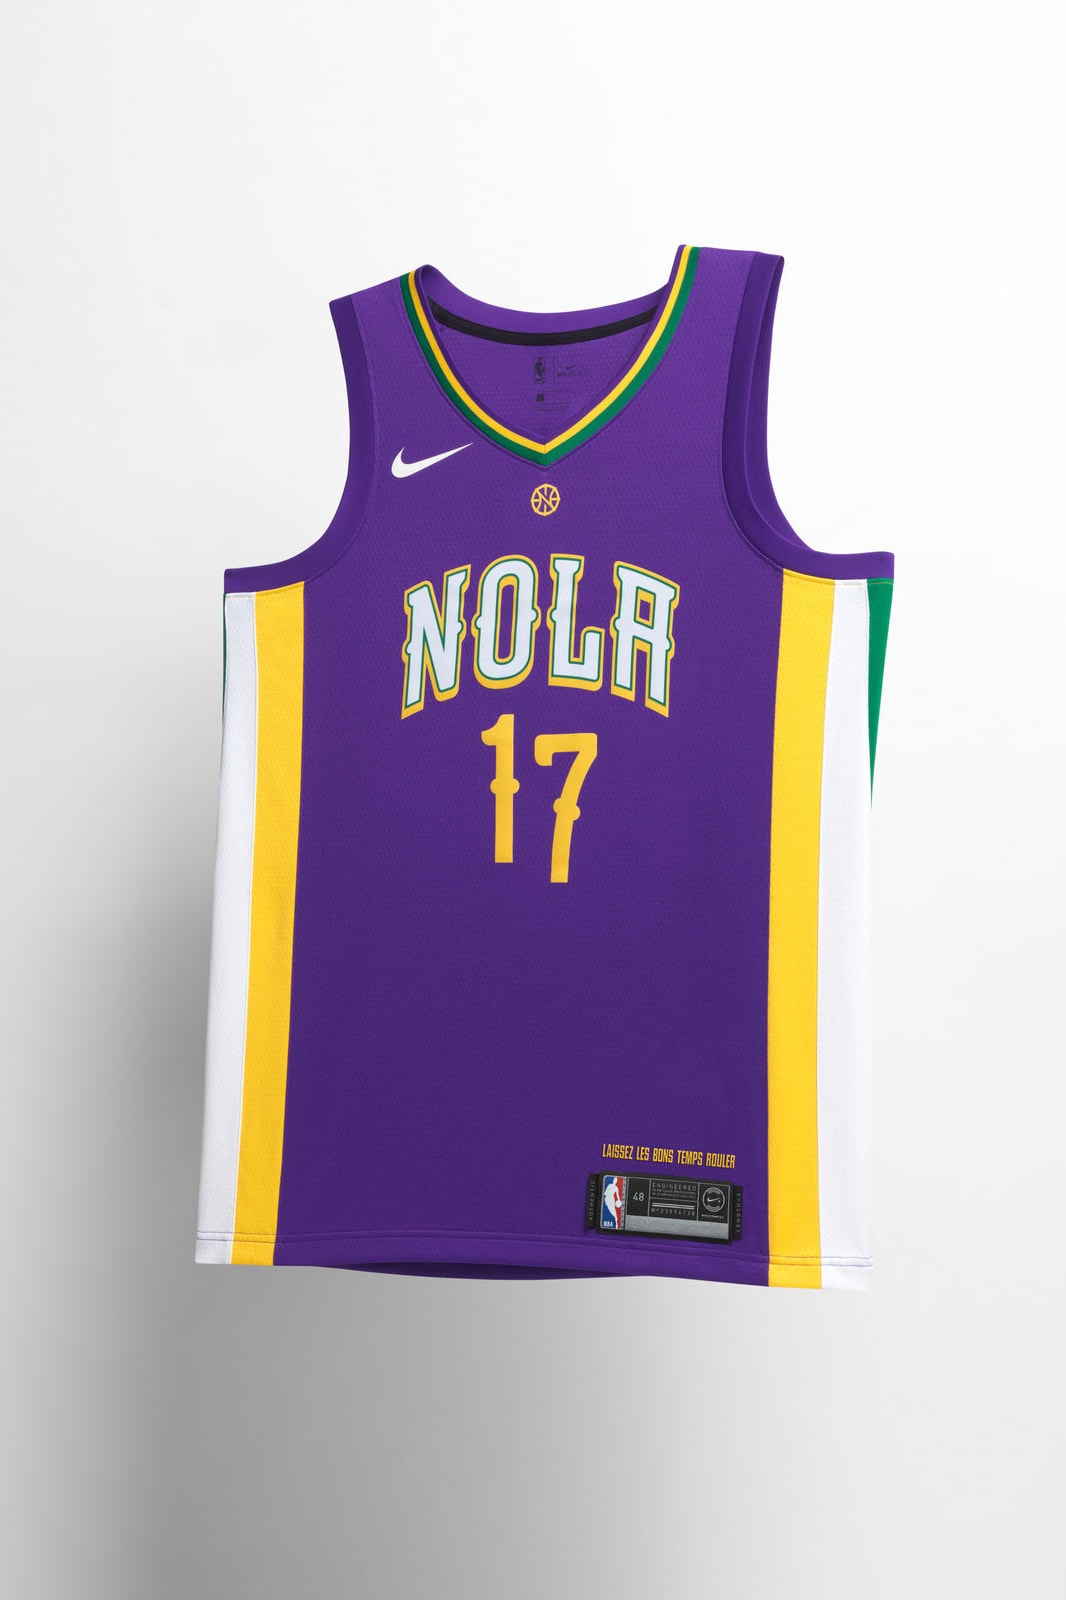 Nike NBA National Basketball Association Jerseys Sportswear Athlete Team city editions uniforms jersey uniform Association Icon Statement